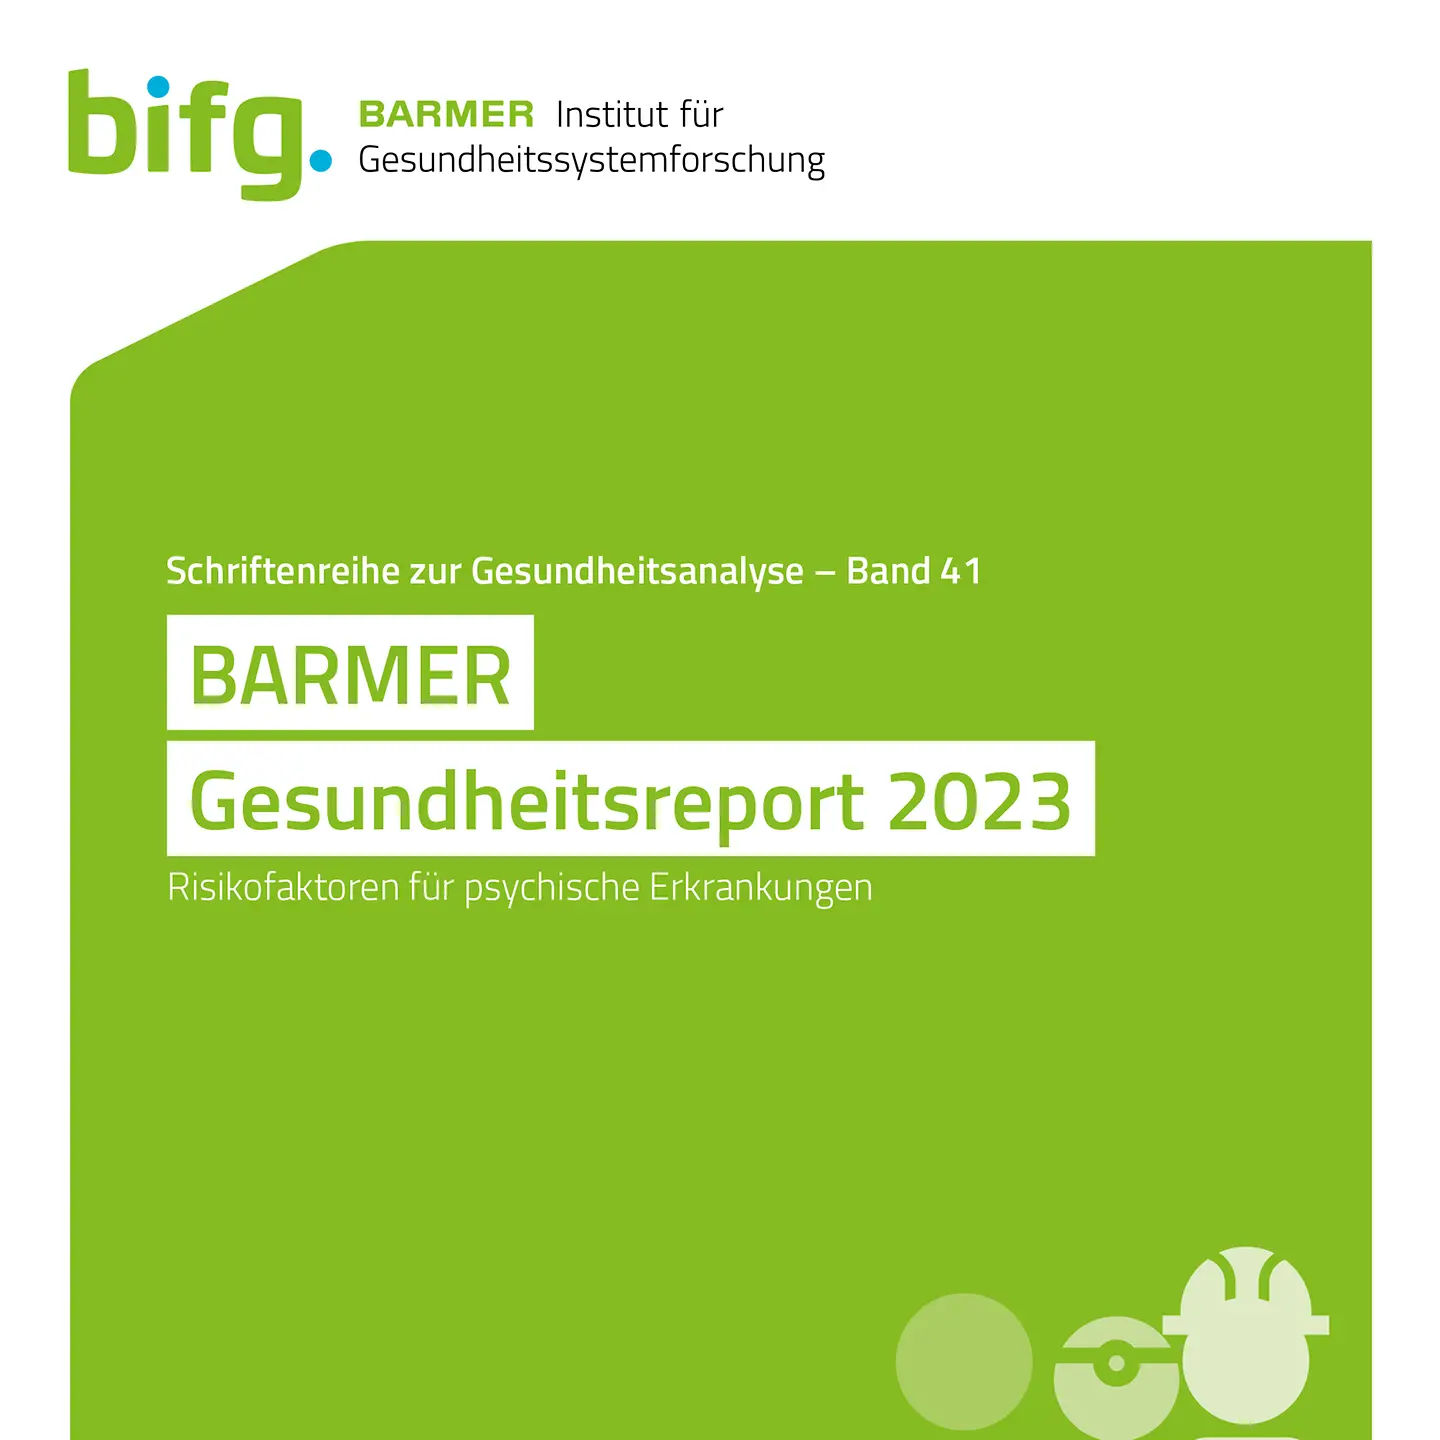 Das Cover des Barmer-Gesundheitsreports 2023